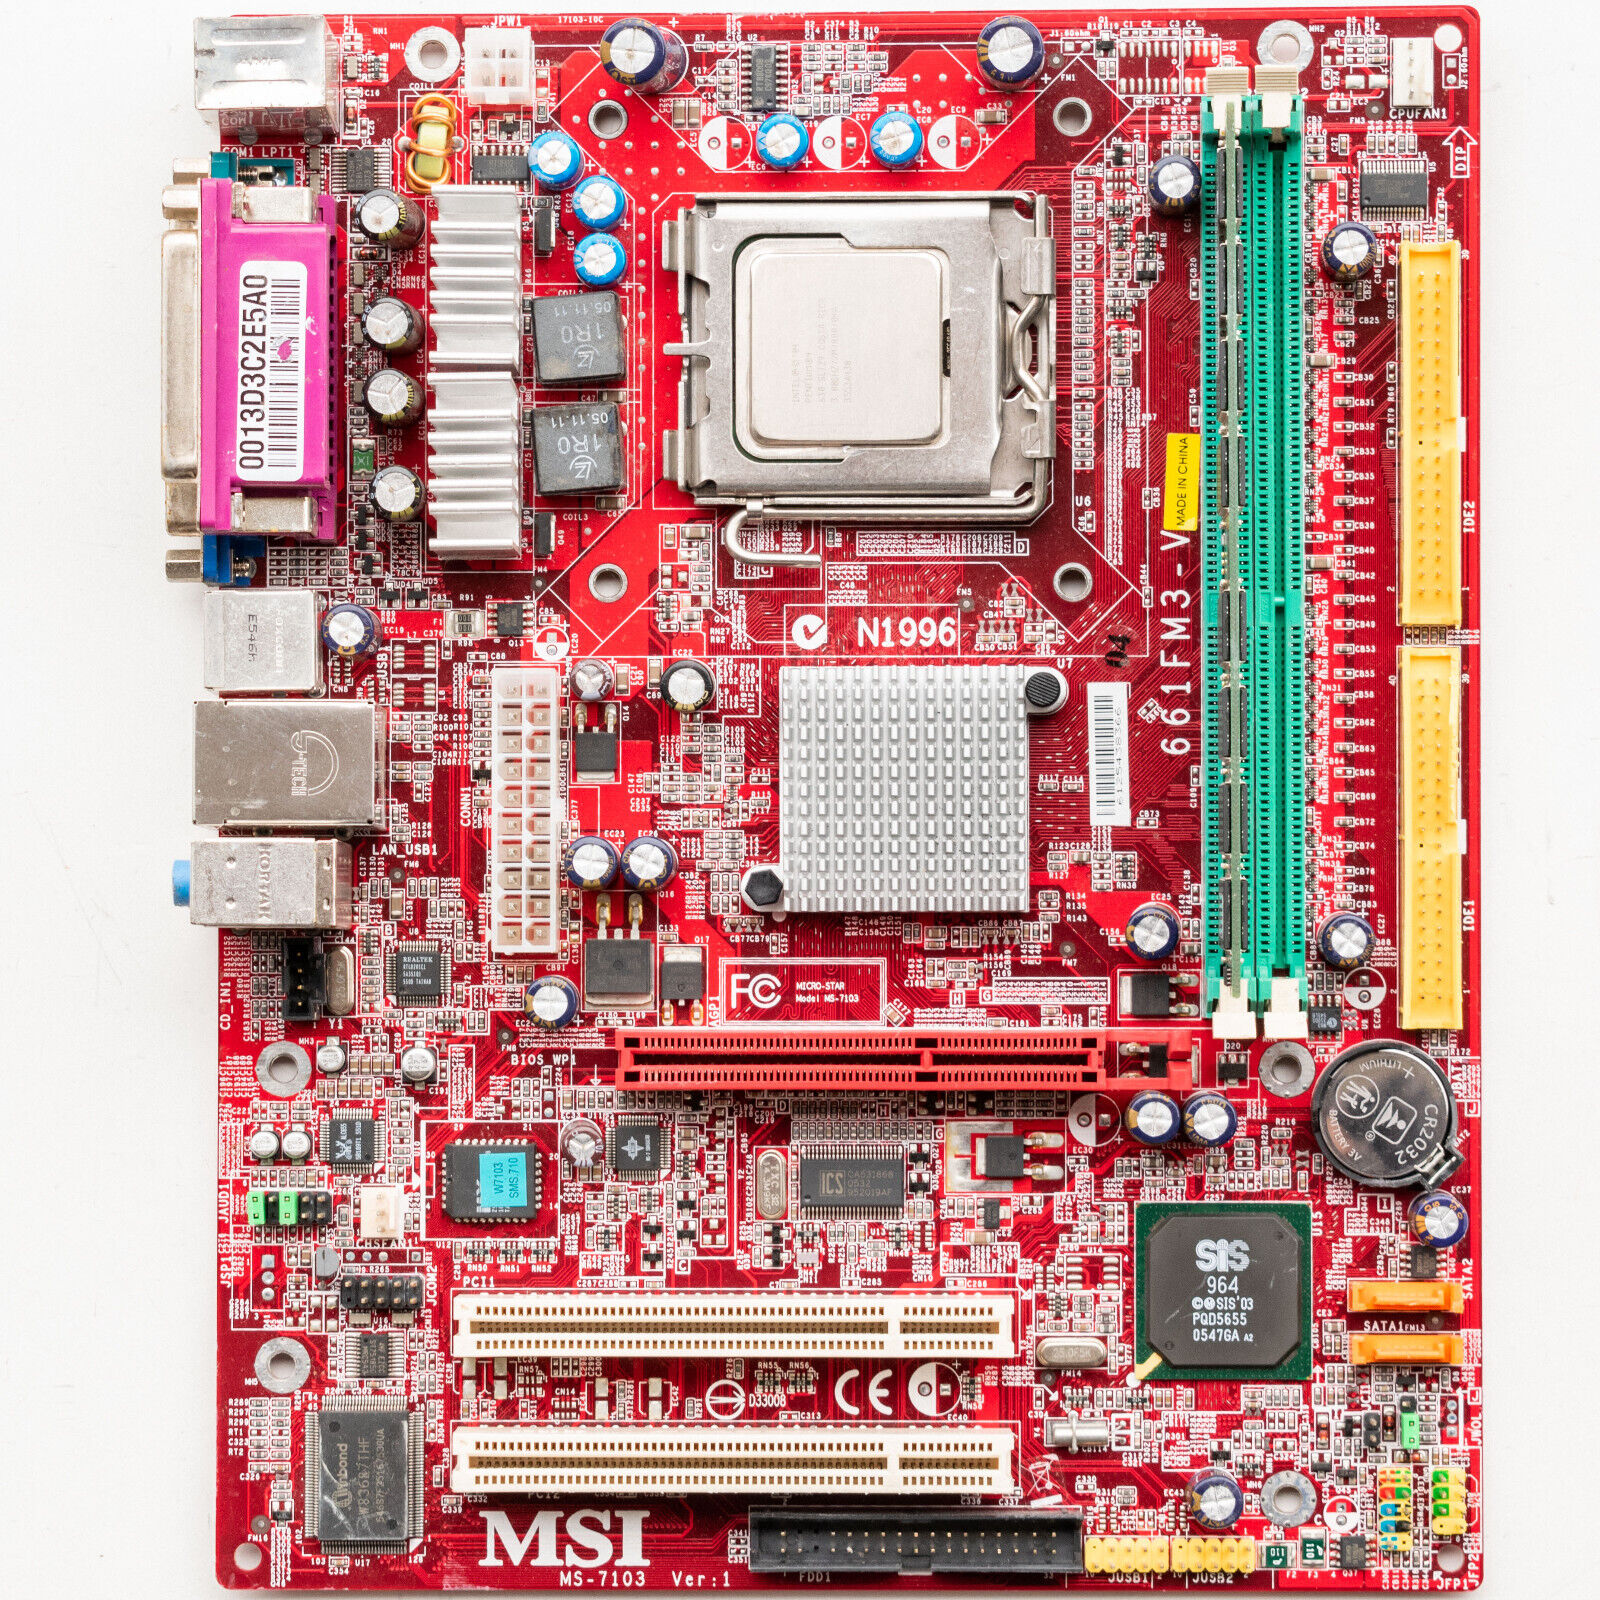 MSI 661FM3-V LGA775 AGP Motherboard MicroATX Intel Pentium SiS 661FX Windows 98